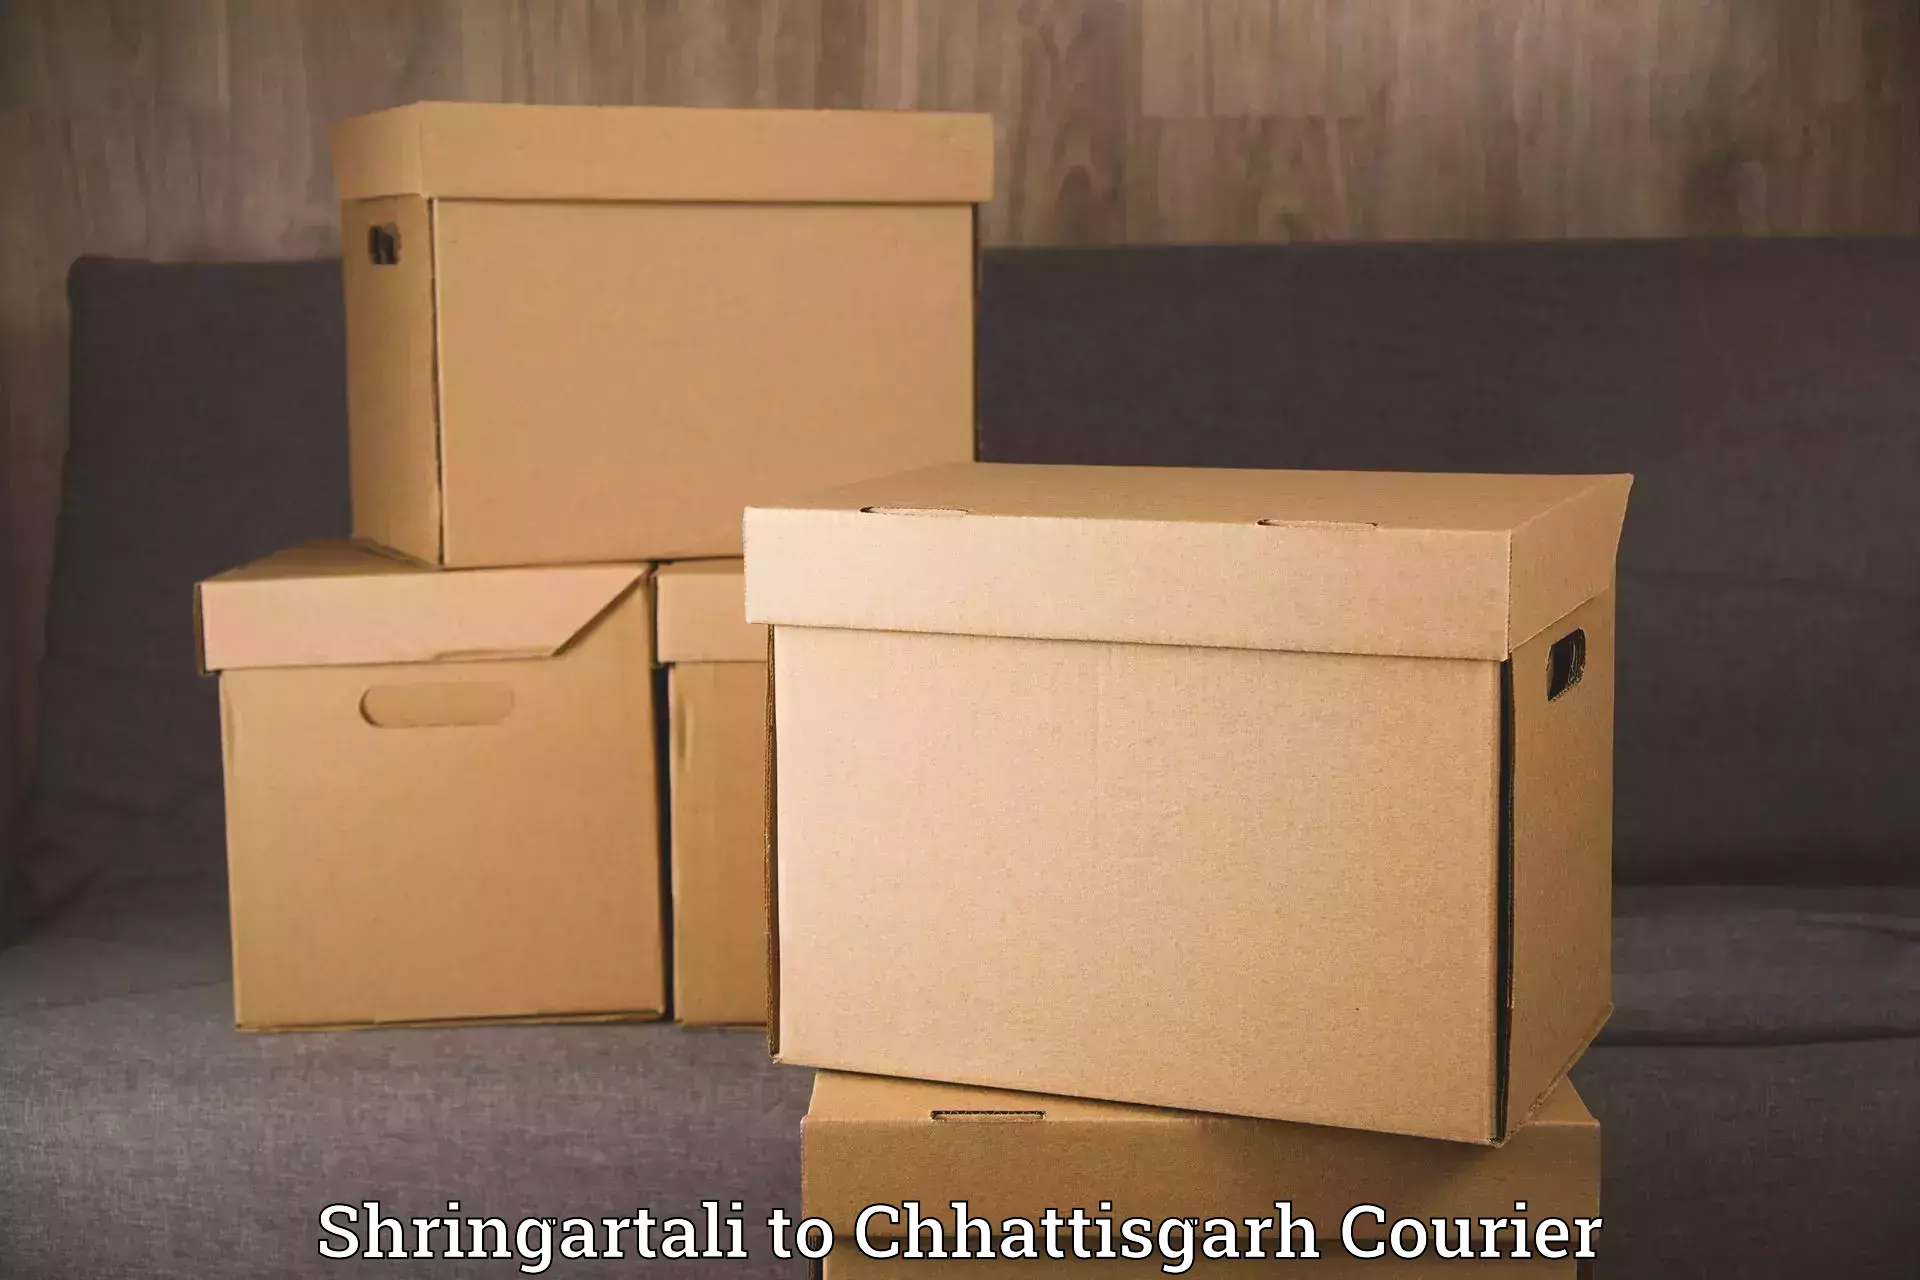 Trusted relocation experts Shringartali to Chhattisgarh